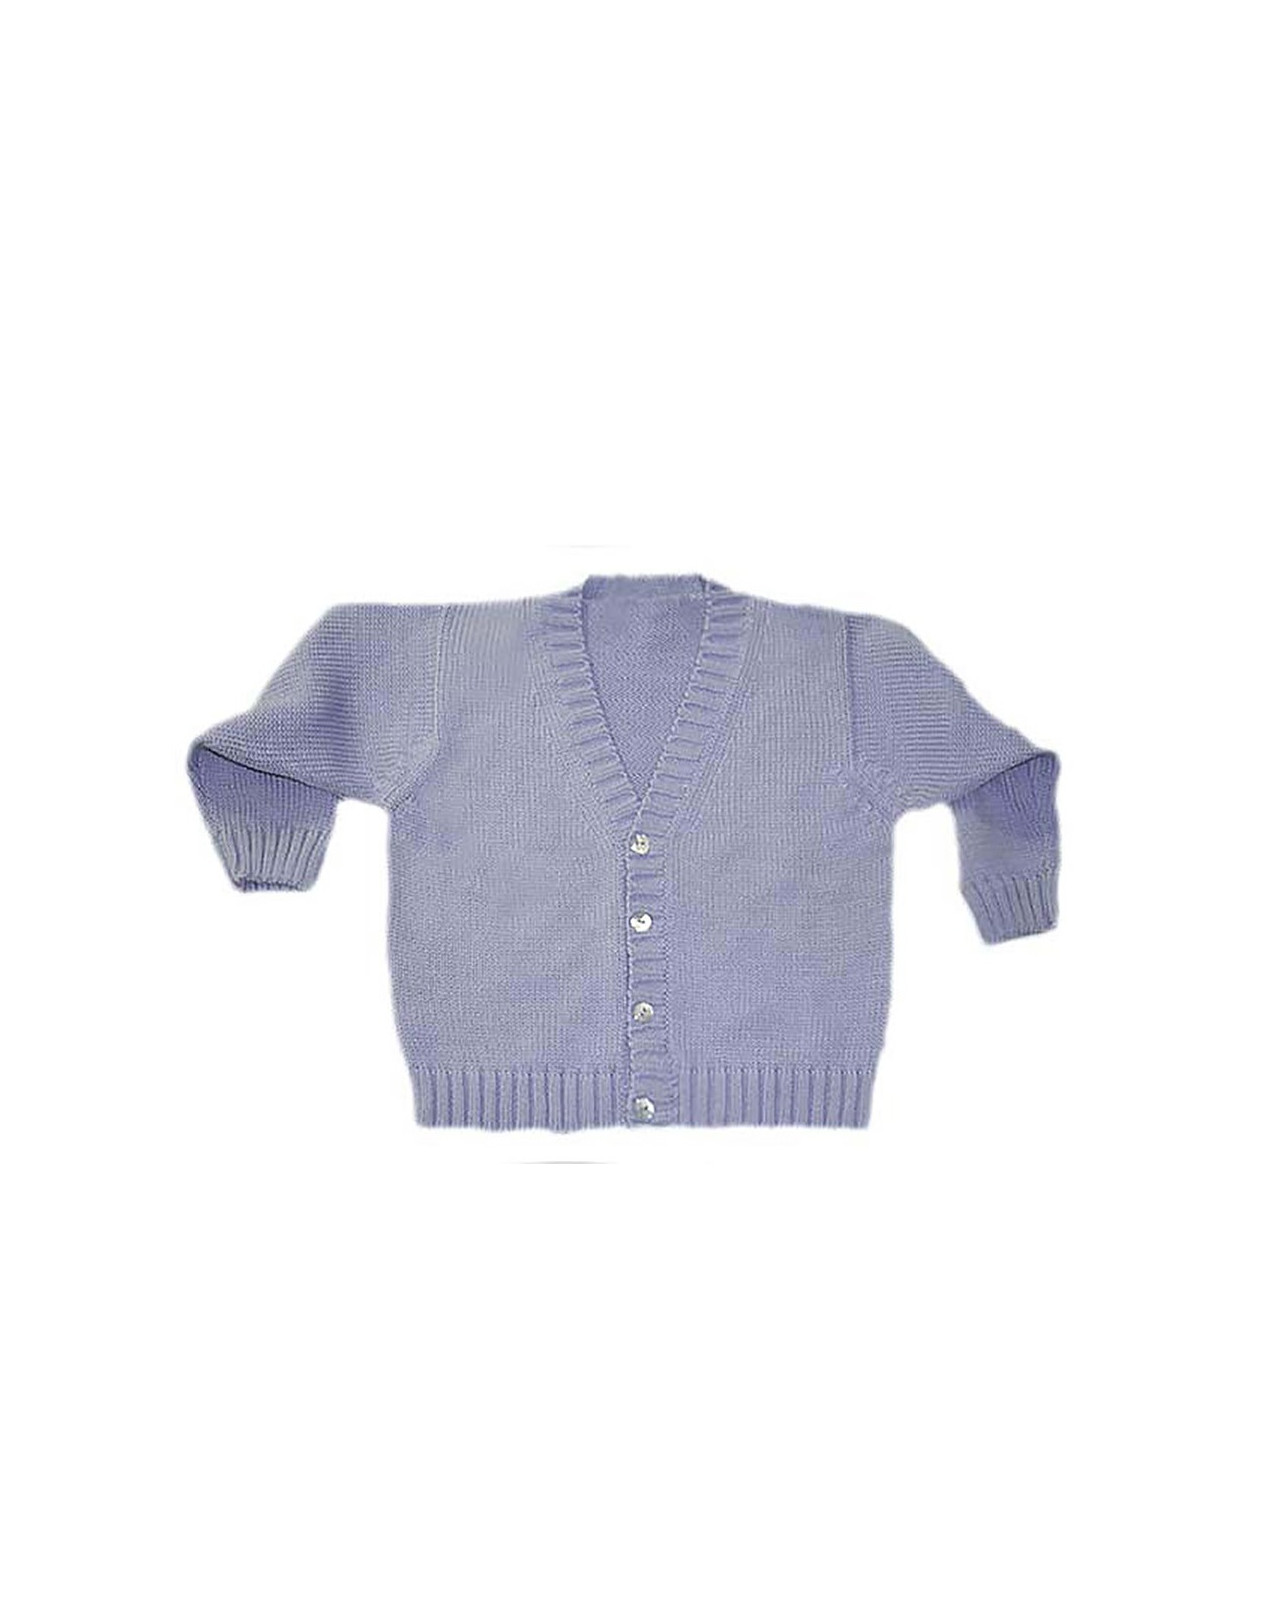 Children wool or cotton Cardigan